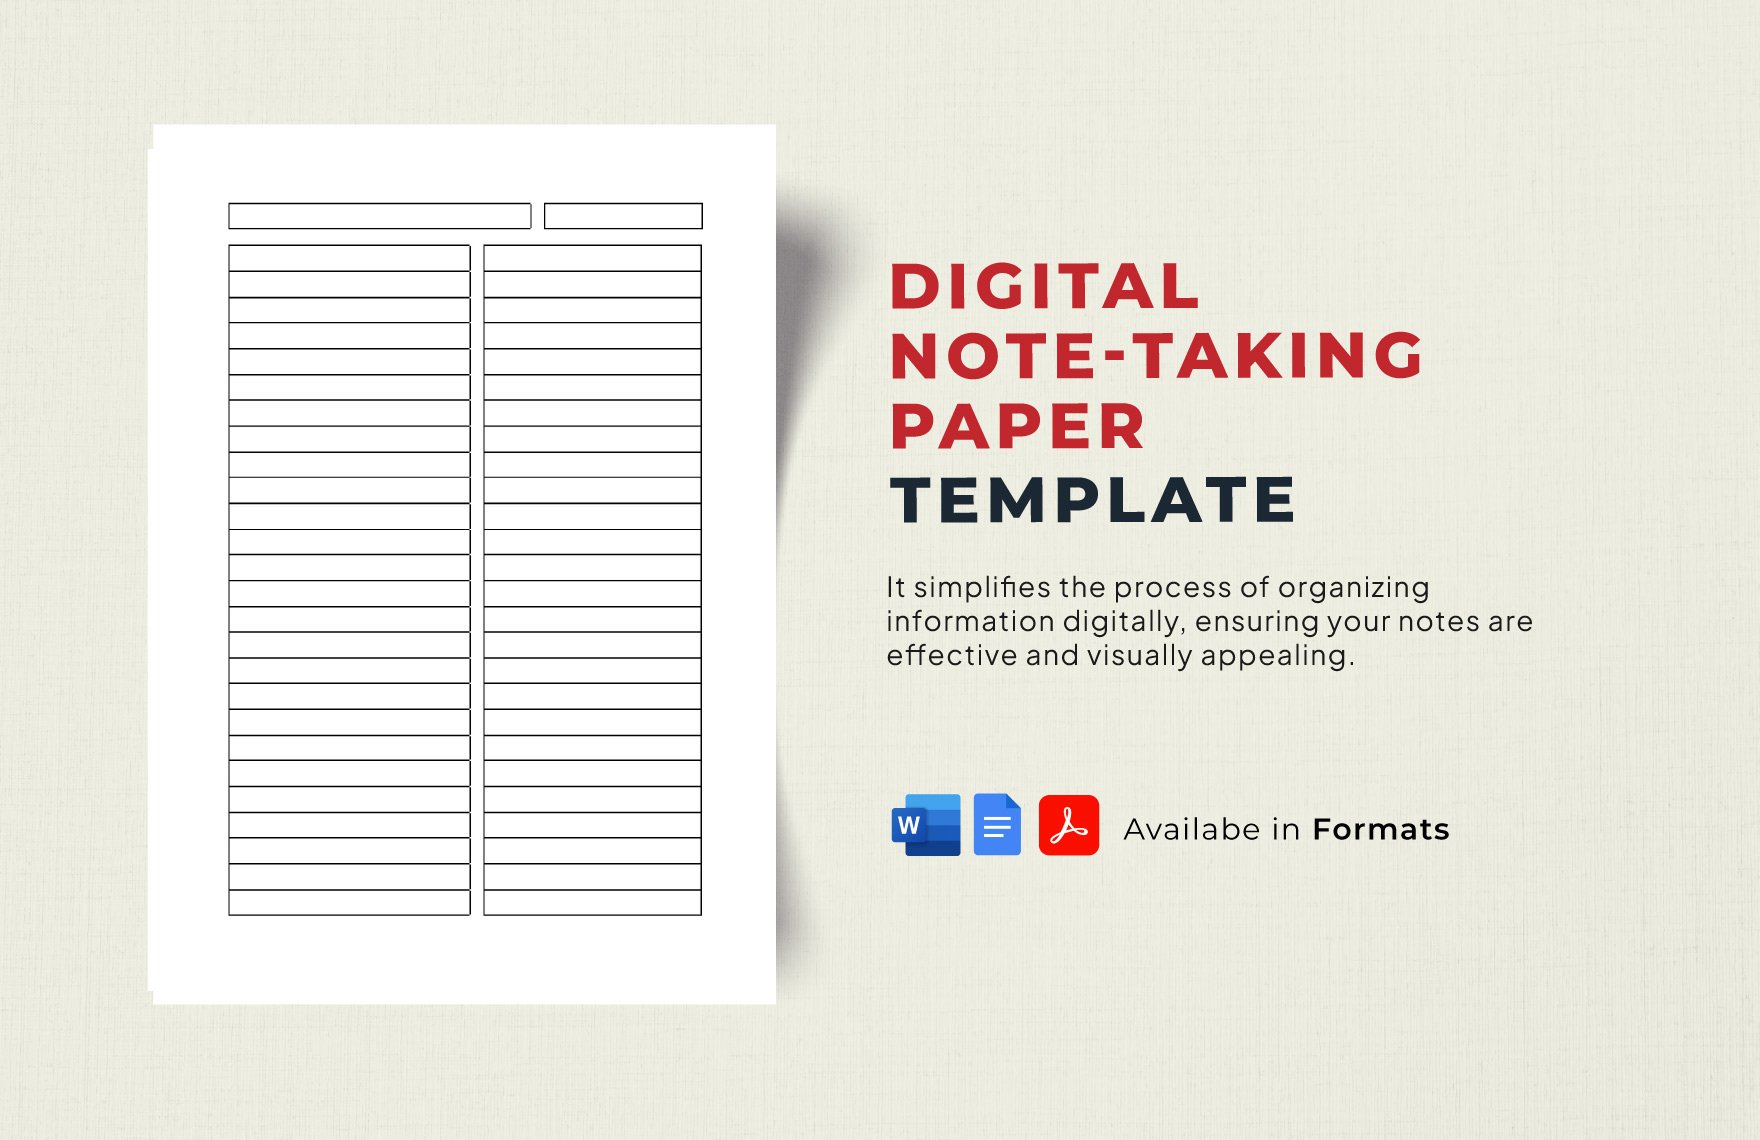 Digital Note-taking Paper Template